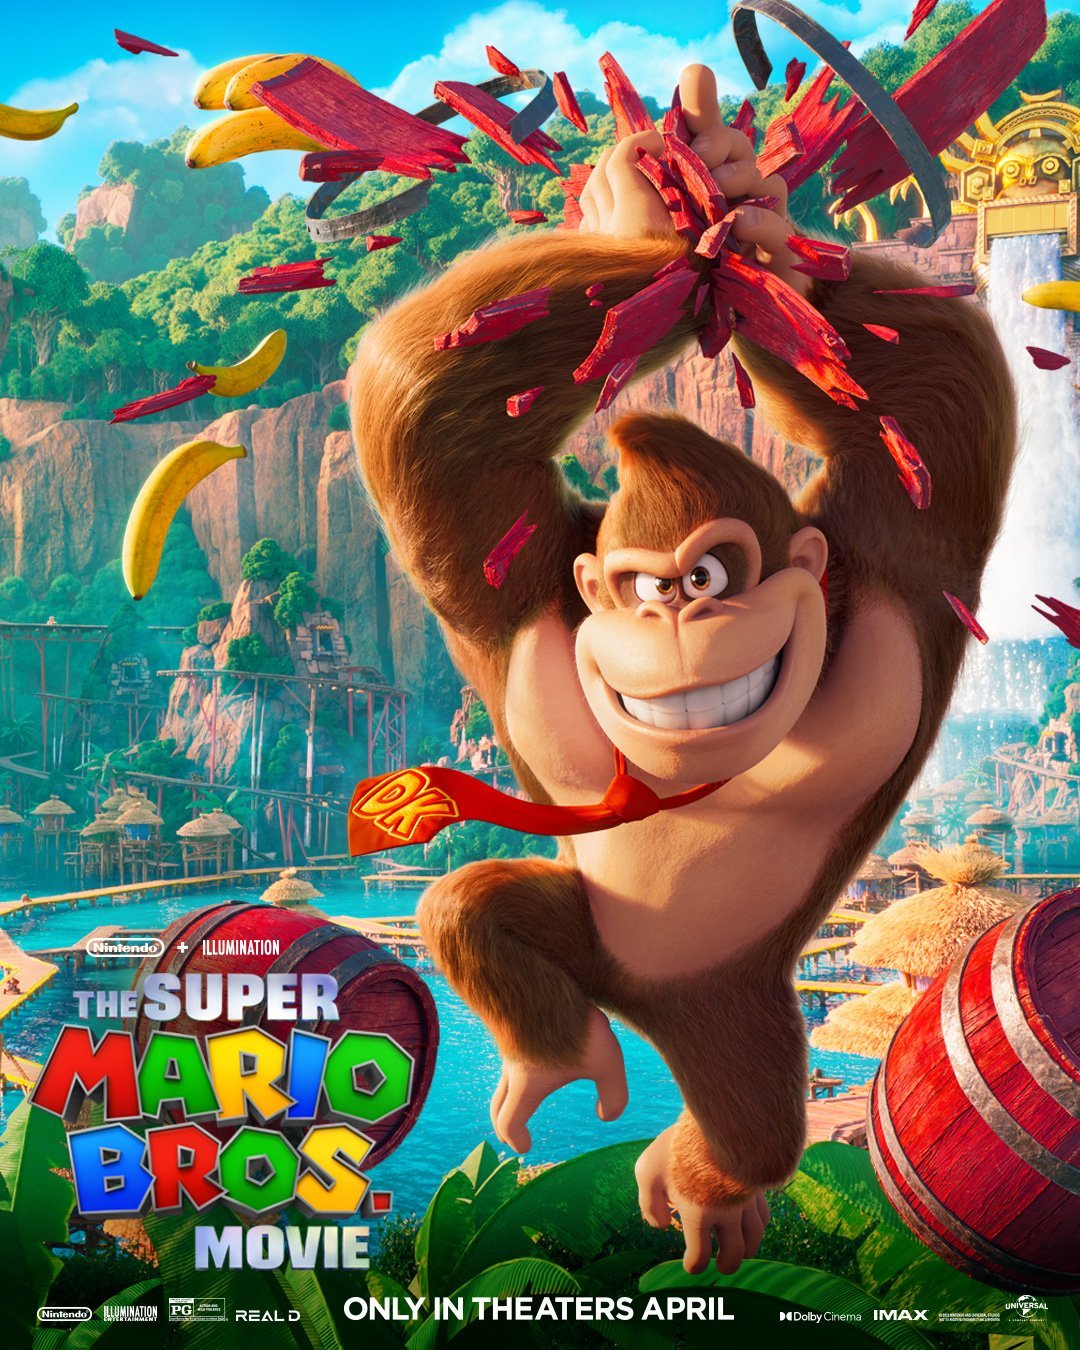 FileThe Super Mario Bros. Movie Donkey Kong Poster.jpg Super Mario